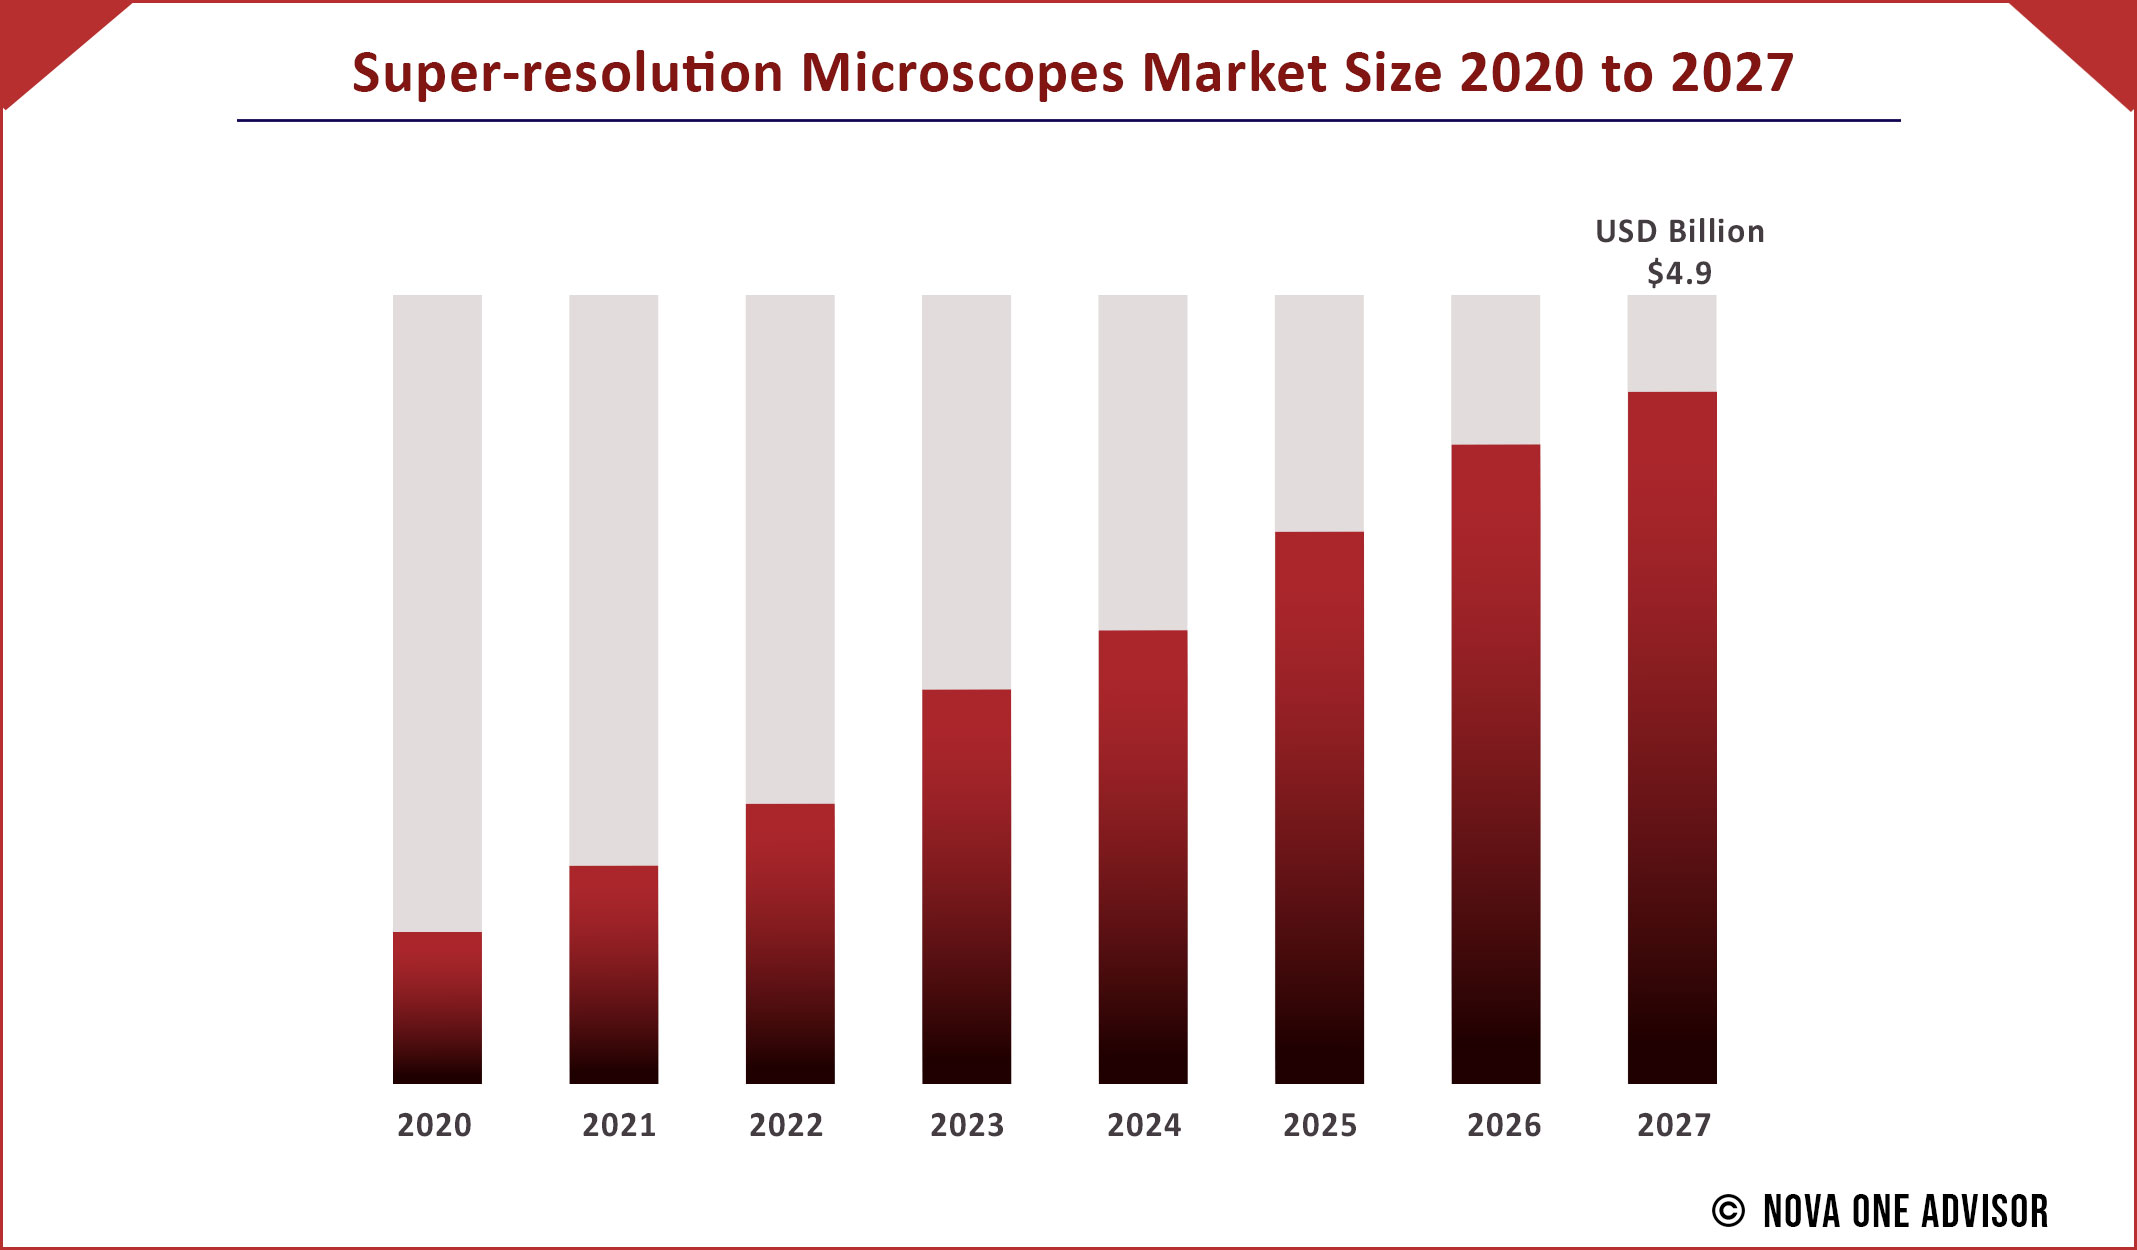 Super-resolution Microscopes Market Size 2020 to 2027